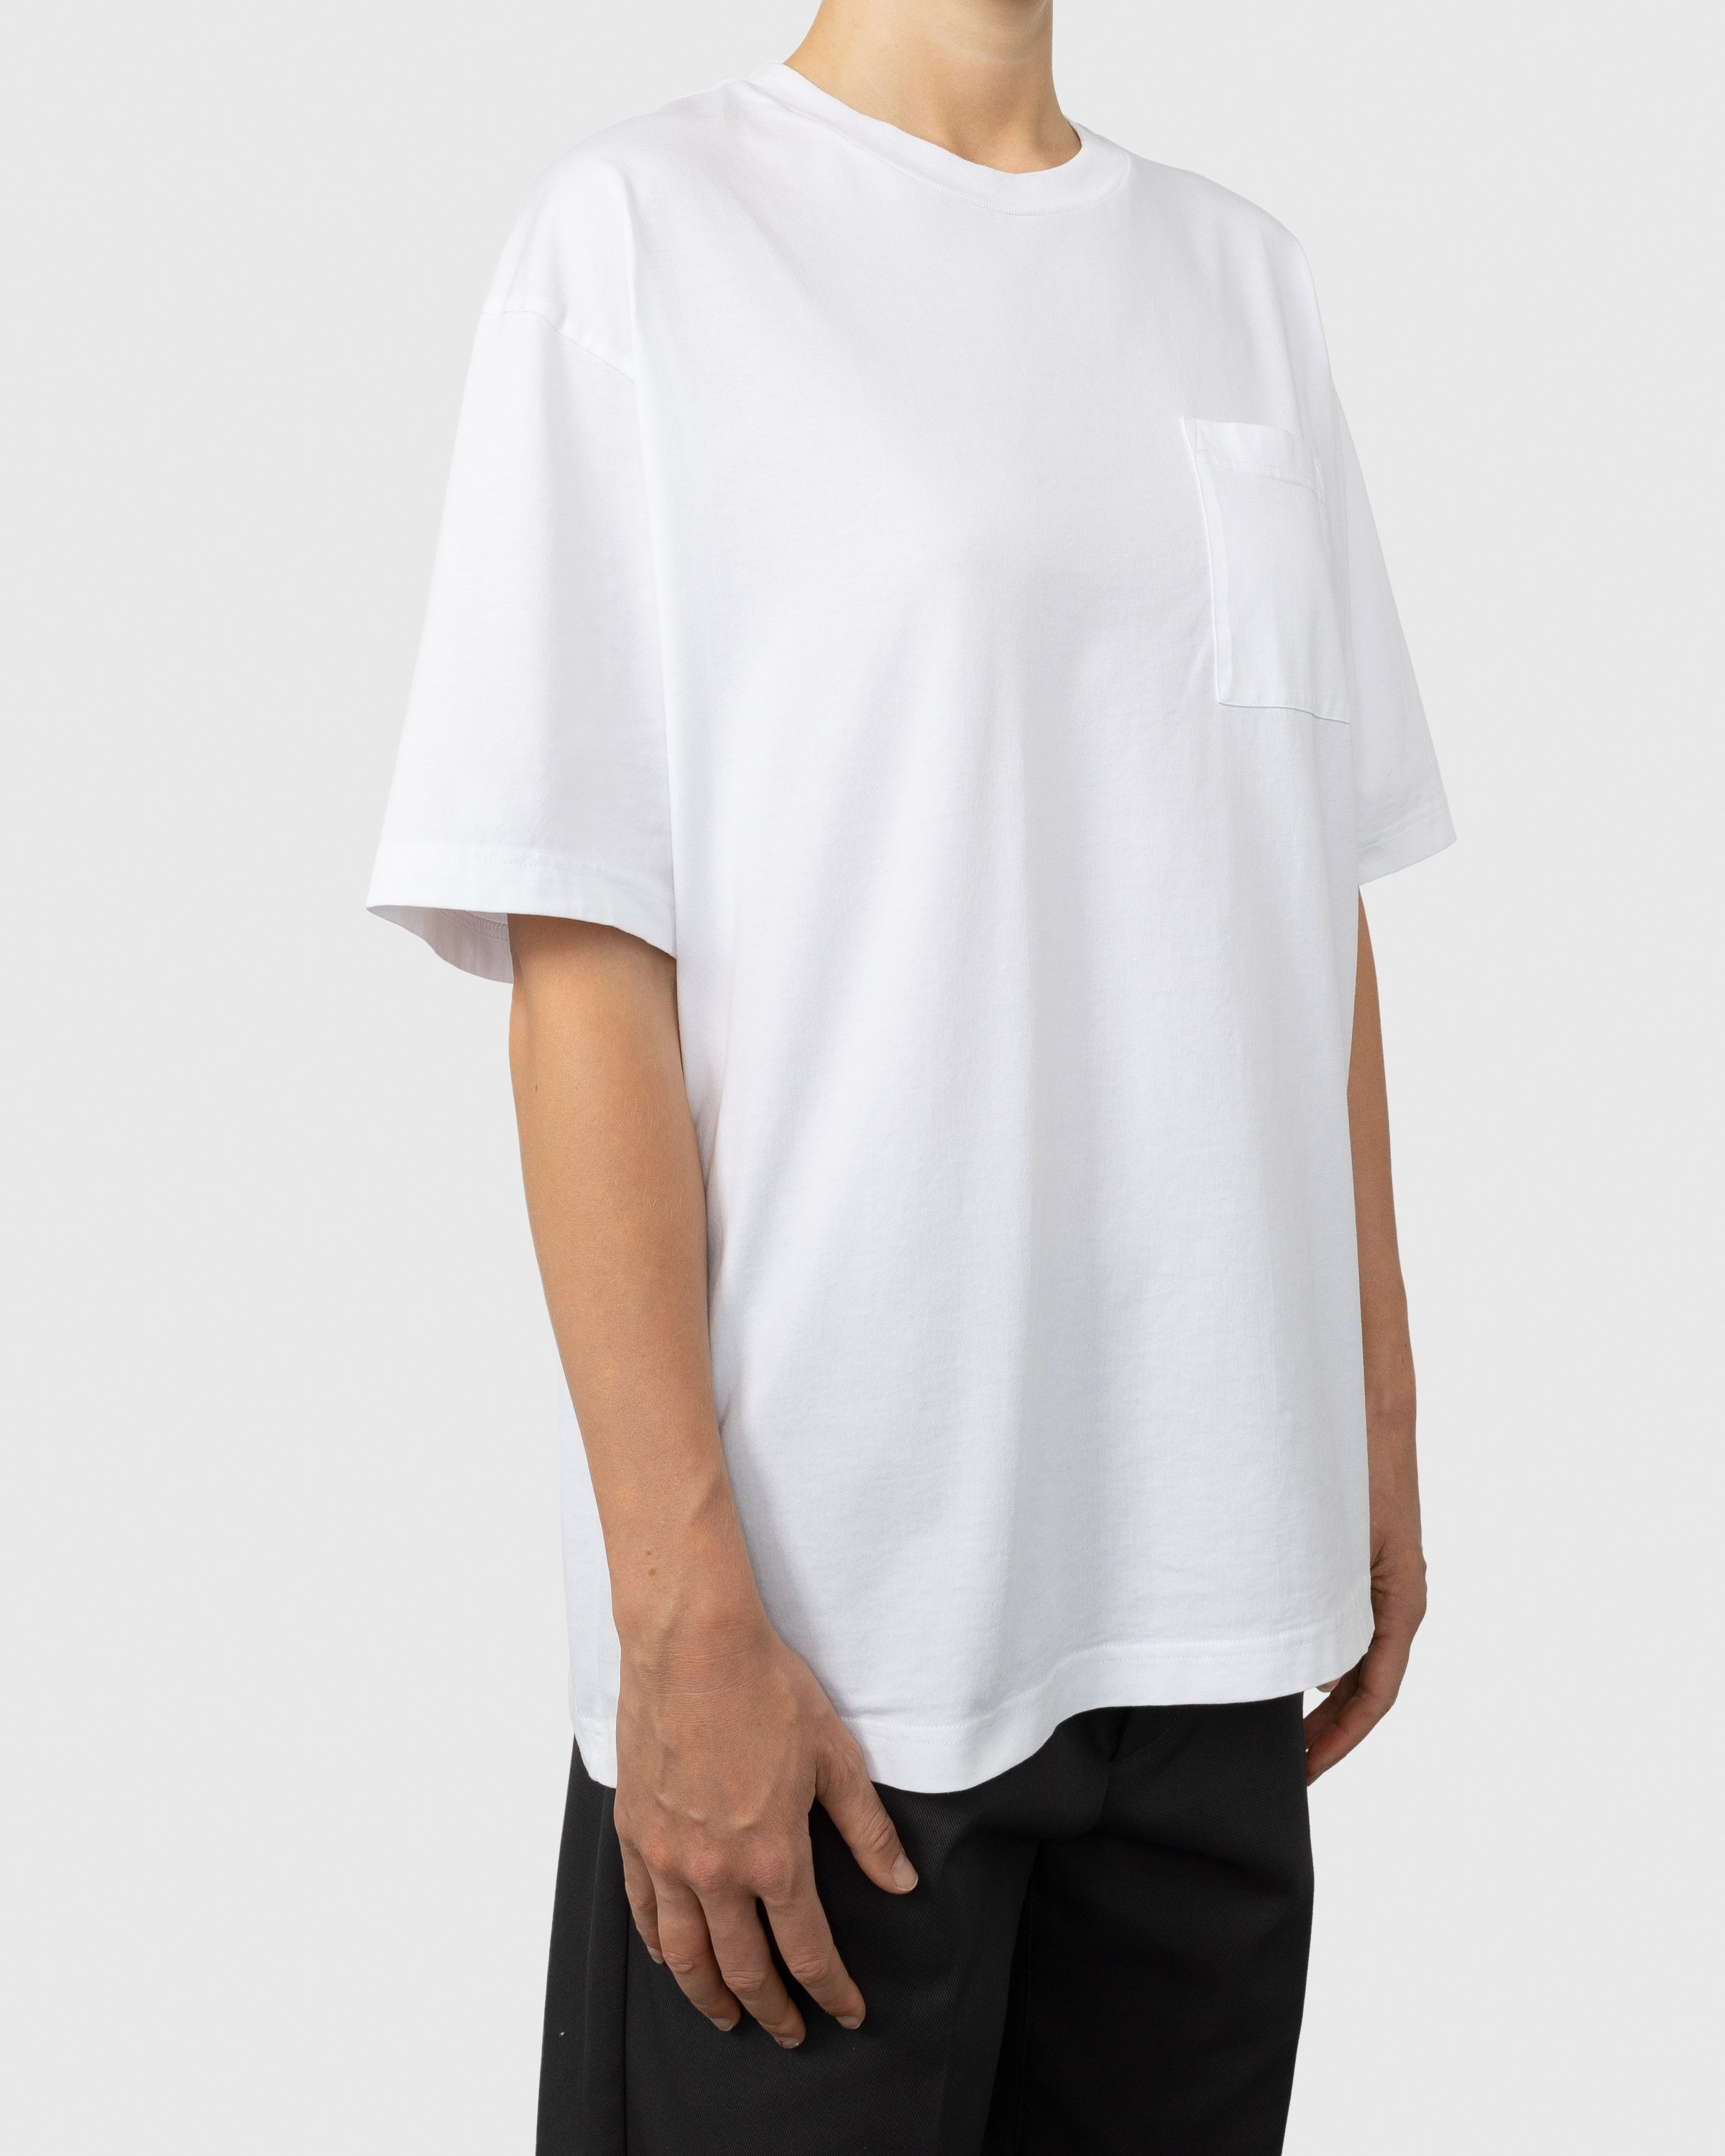 Acne Studios – Organic Cotton Pocket T-Shirt White - T-Shirts - White - Image 3